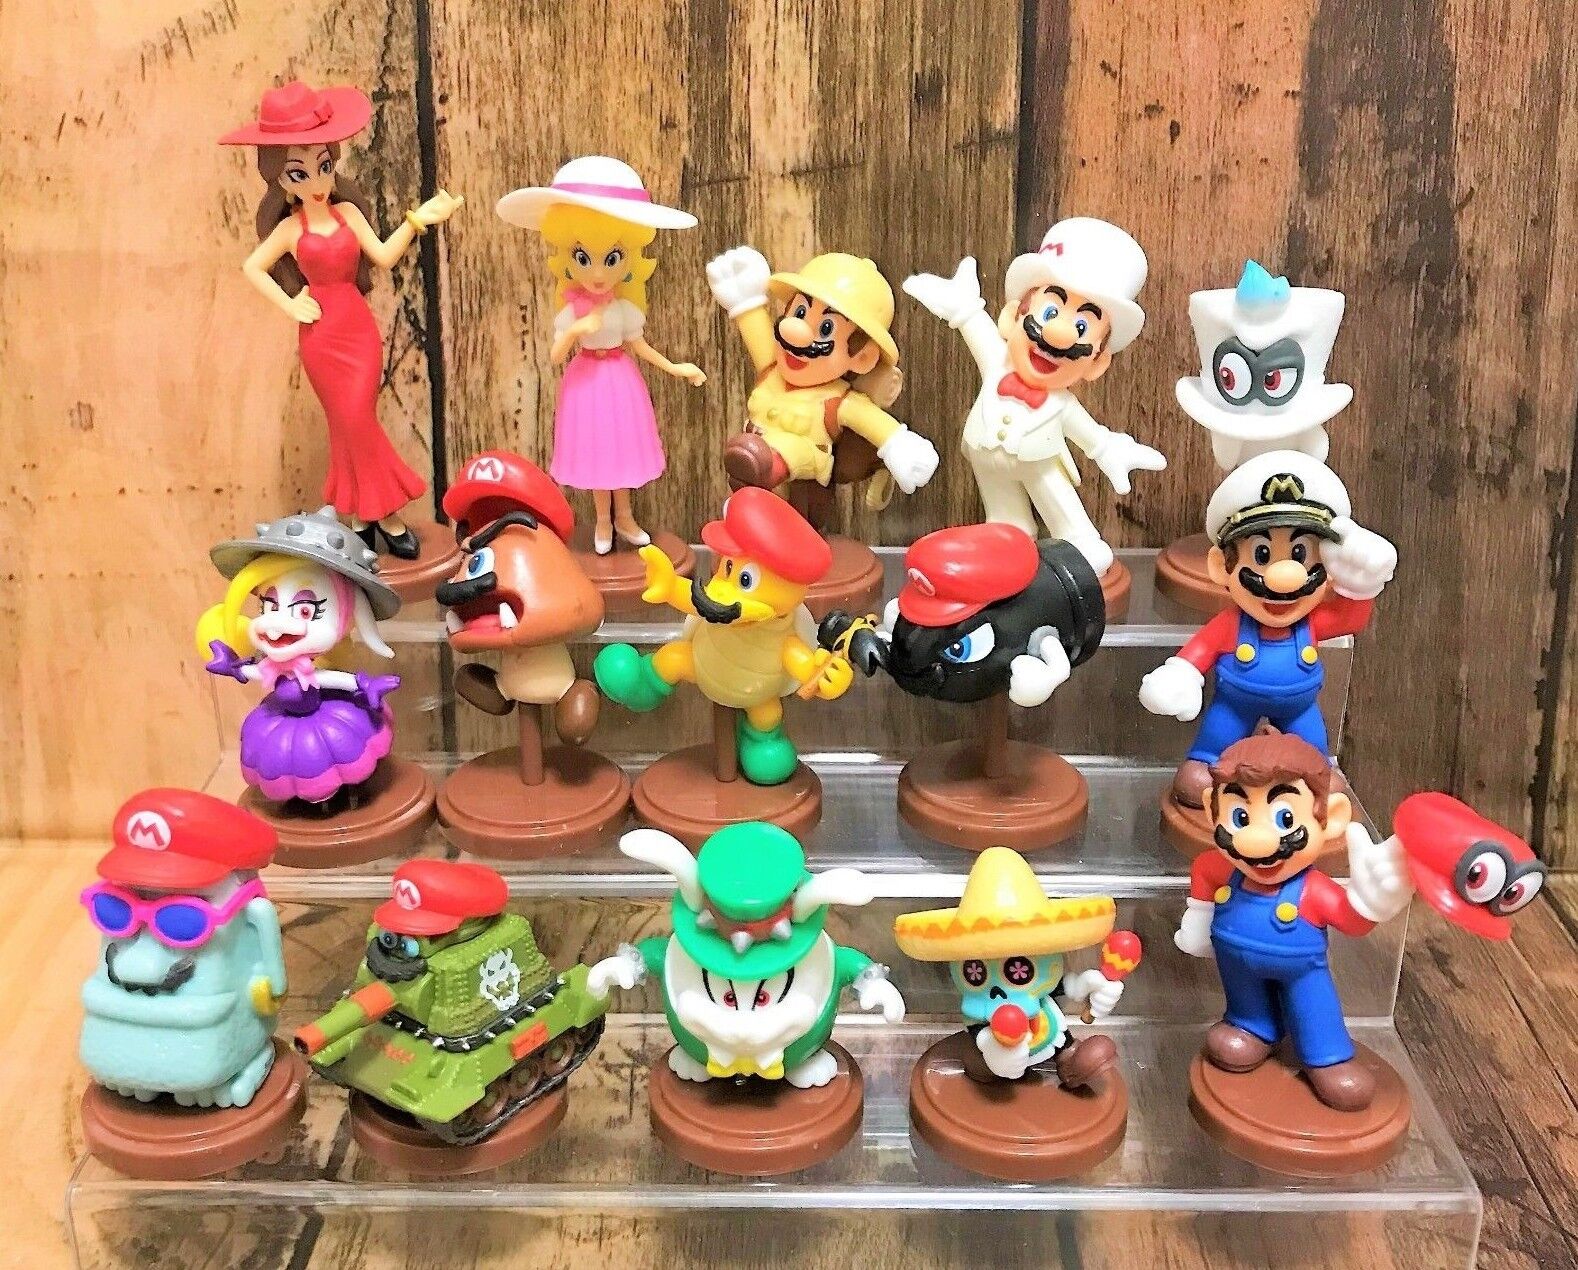 Nintendo 2018 Super Mario Odyssey Chocolate Egg Figure All 15 Type Complete Set